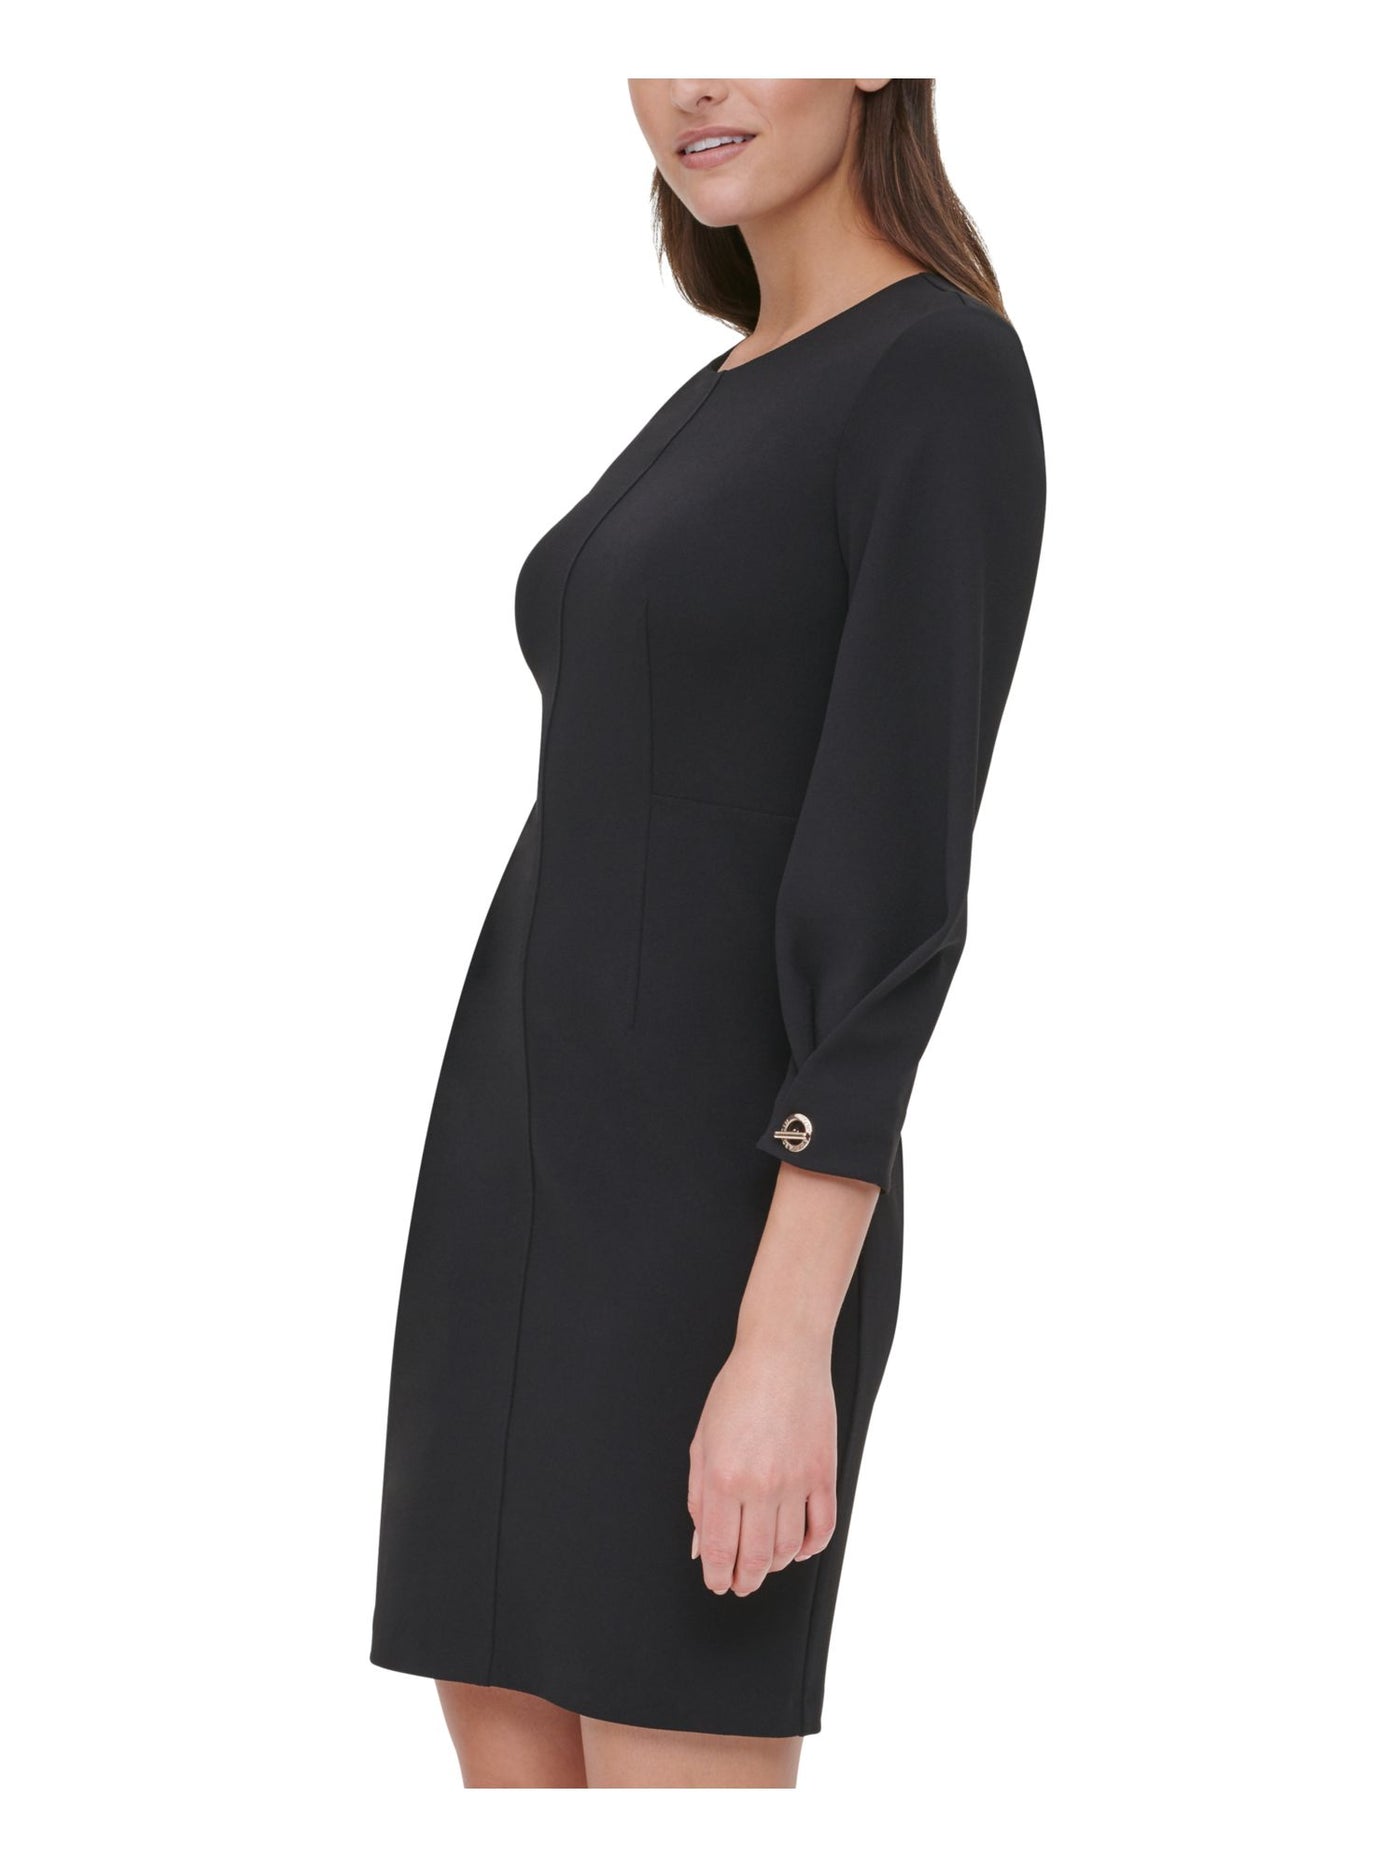 TOMMY HILFIGER Womens Black Long Sleeve Jewel Neck Above The Knee Wear To Work Sheath Dress 12